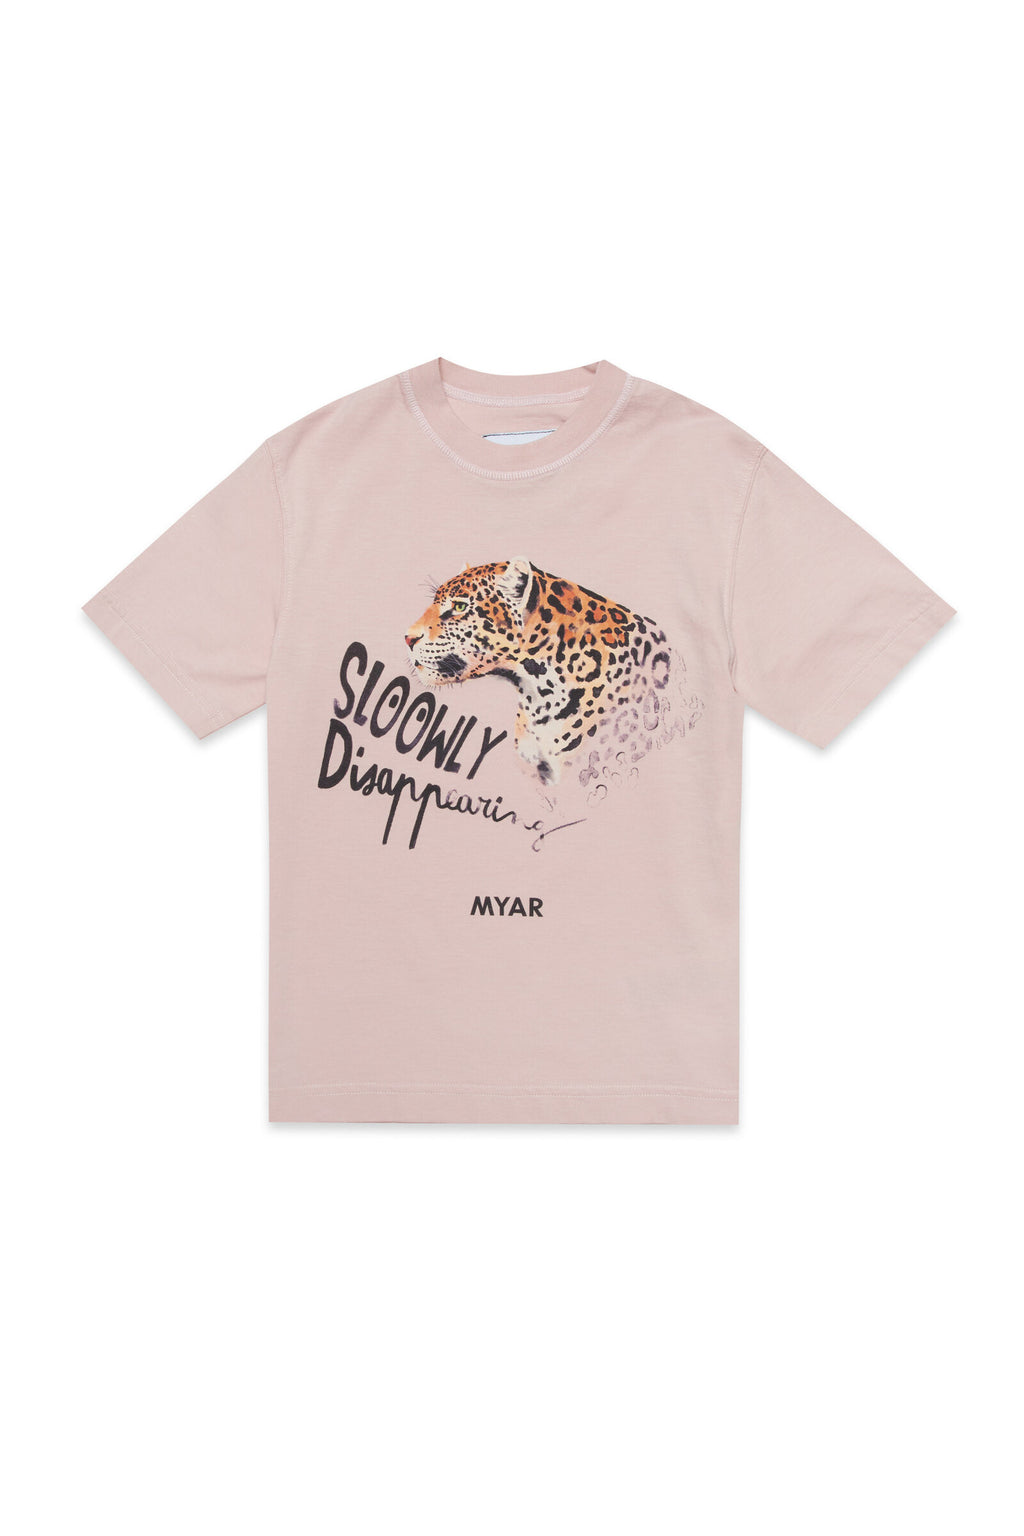 T-shirt girocollo in tessuto deadstock rosa con stampa digitale Sloowly